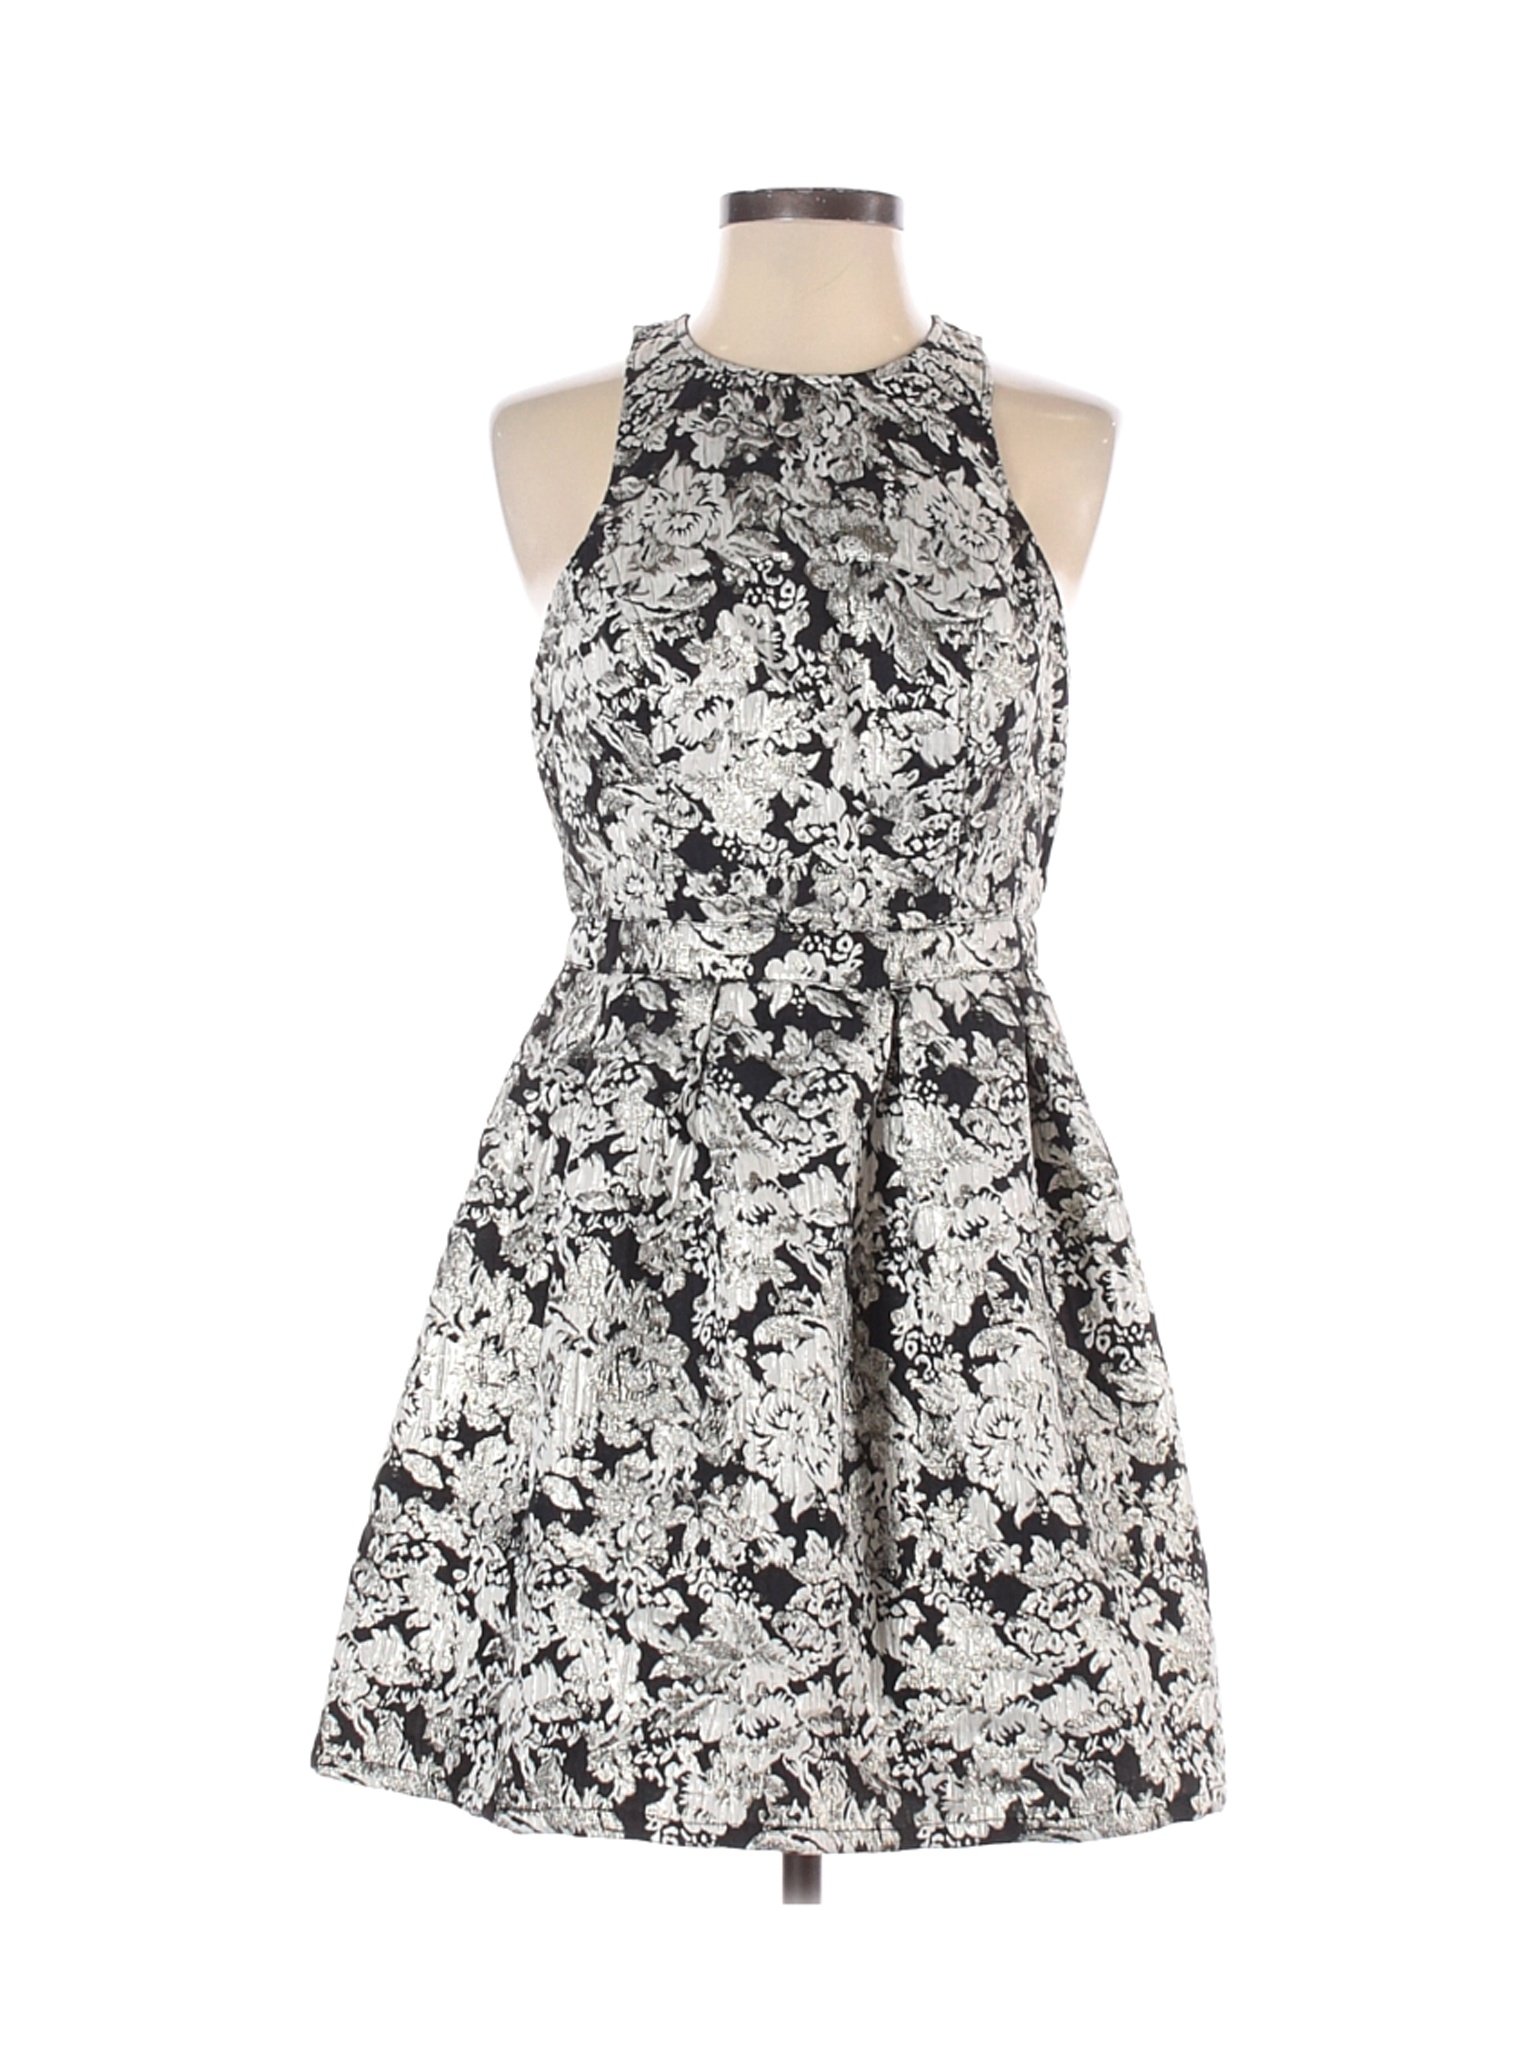 Abercrombie & Fitch Women Black Casual Dress S | eBay